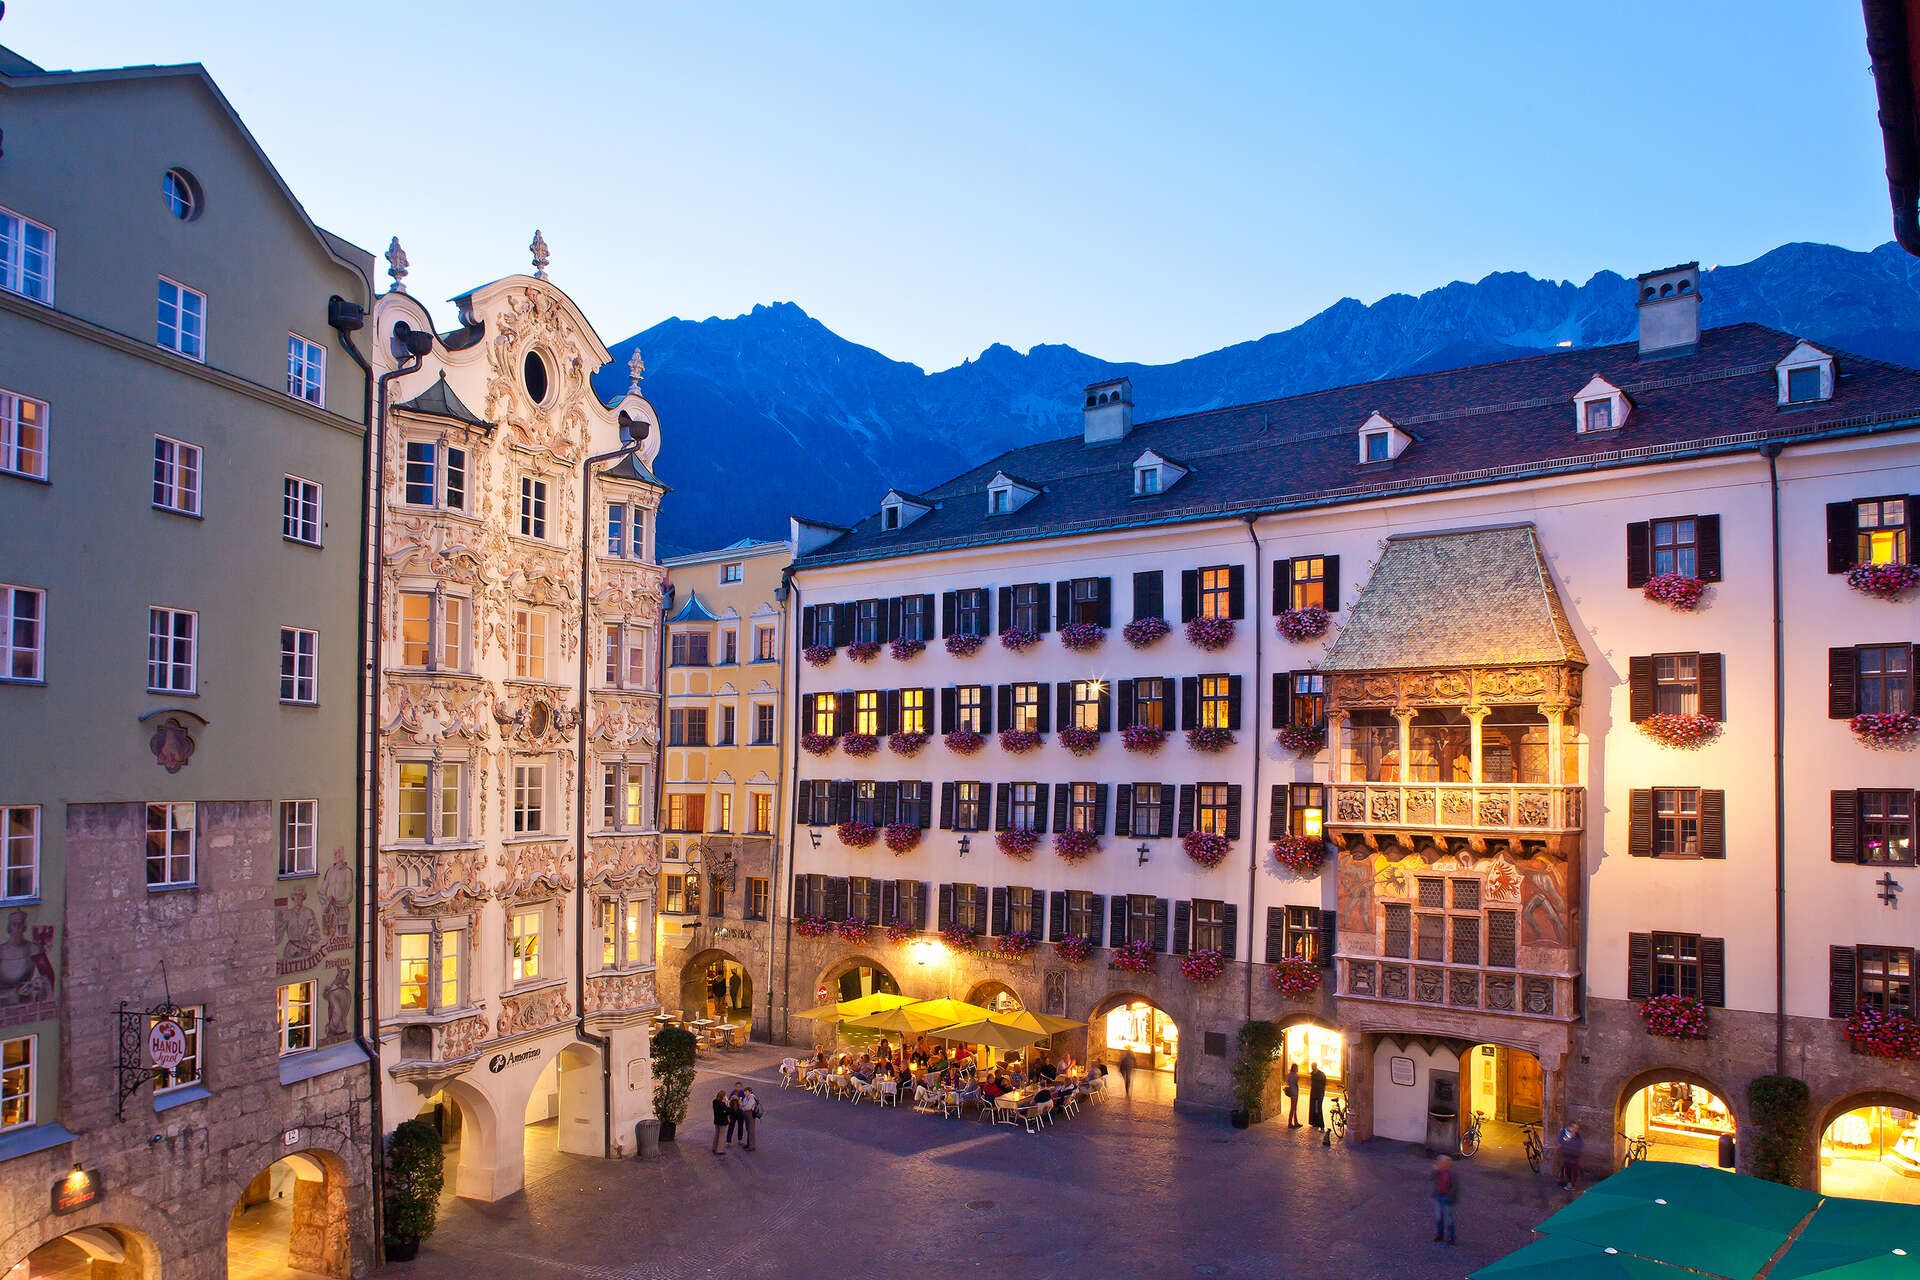 Innsbruck center - the golden roof